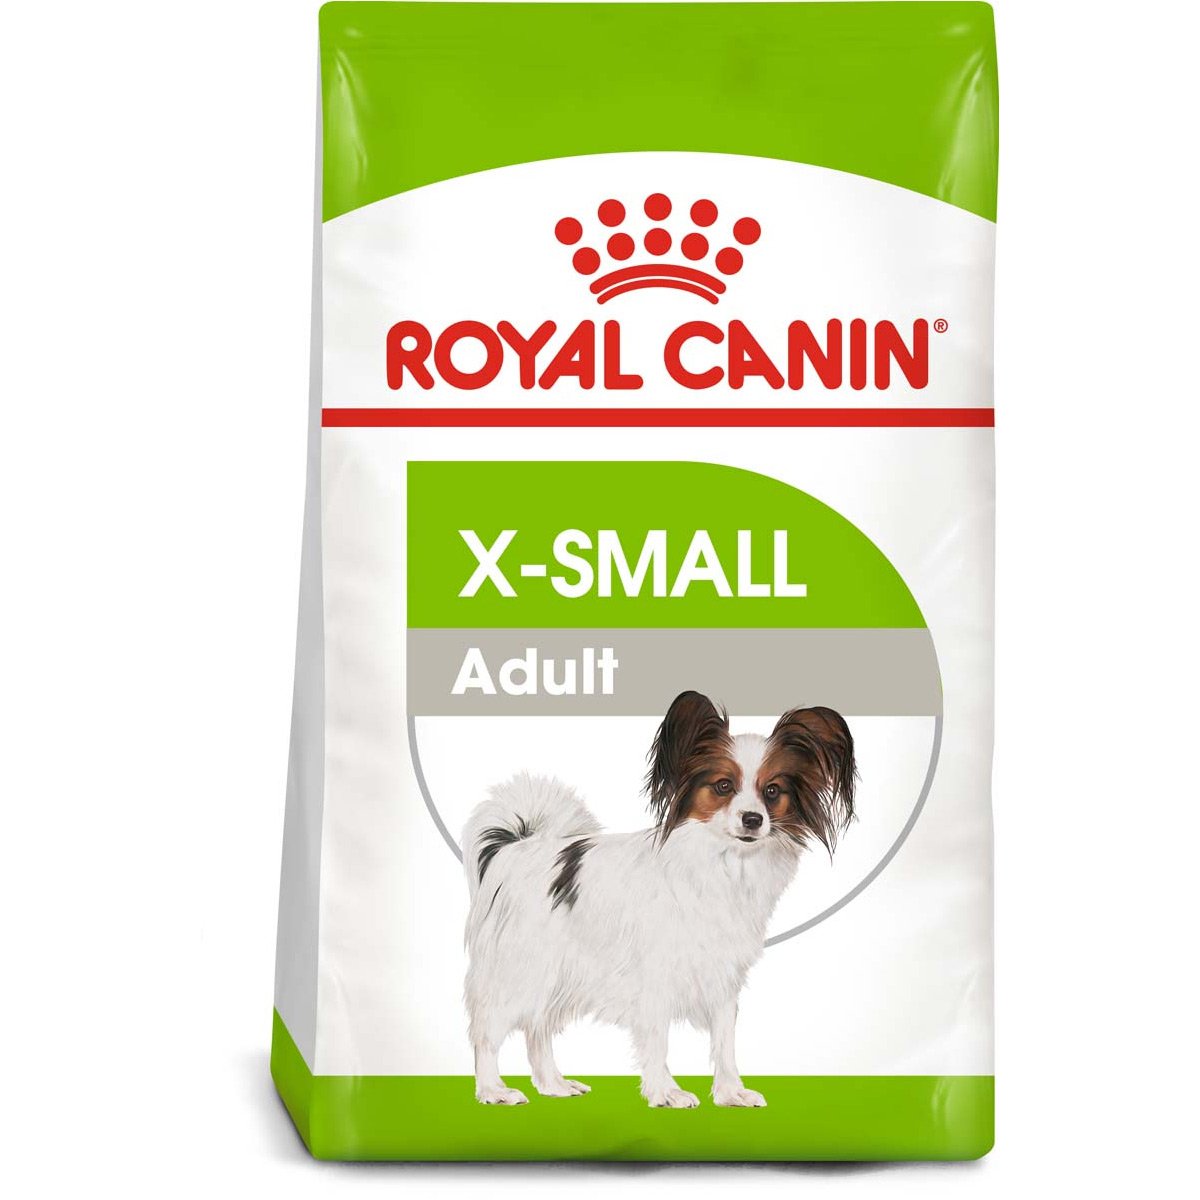 ROYAL CANIN X-SMALL Adult Trockenfutter für sehr kleine Hunde 3kg von Royal Canin